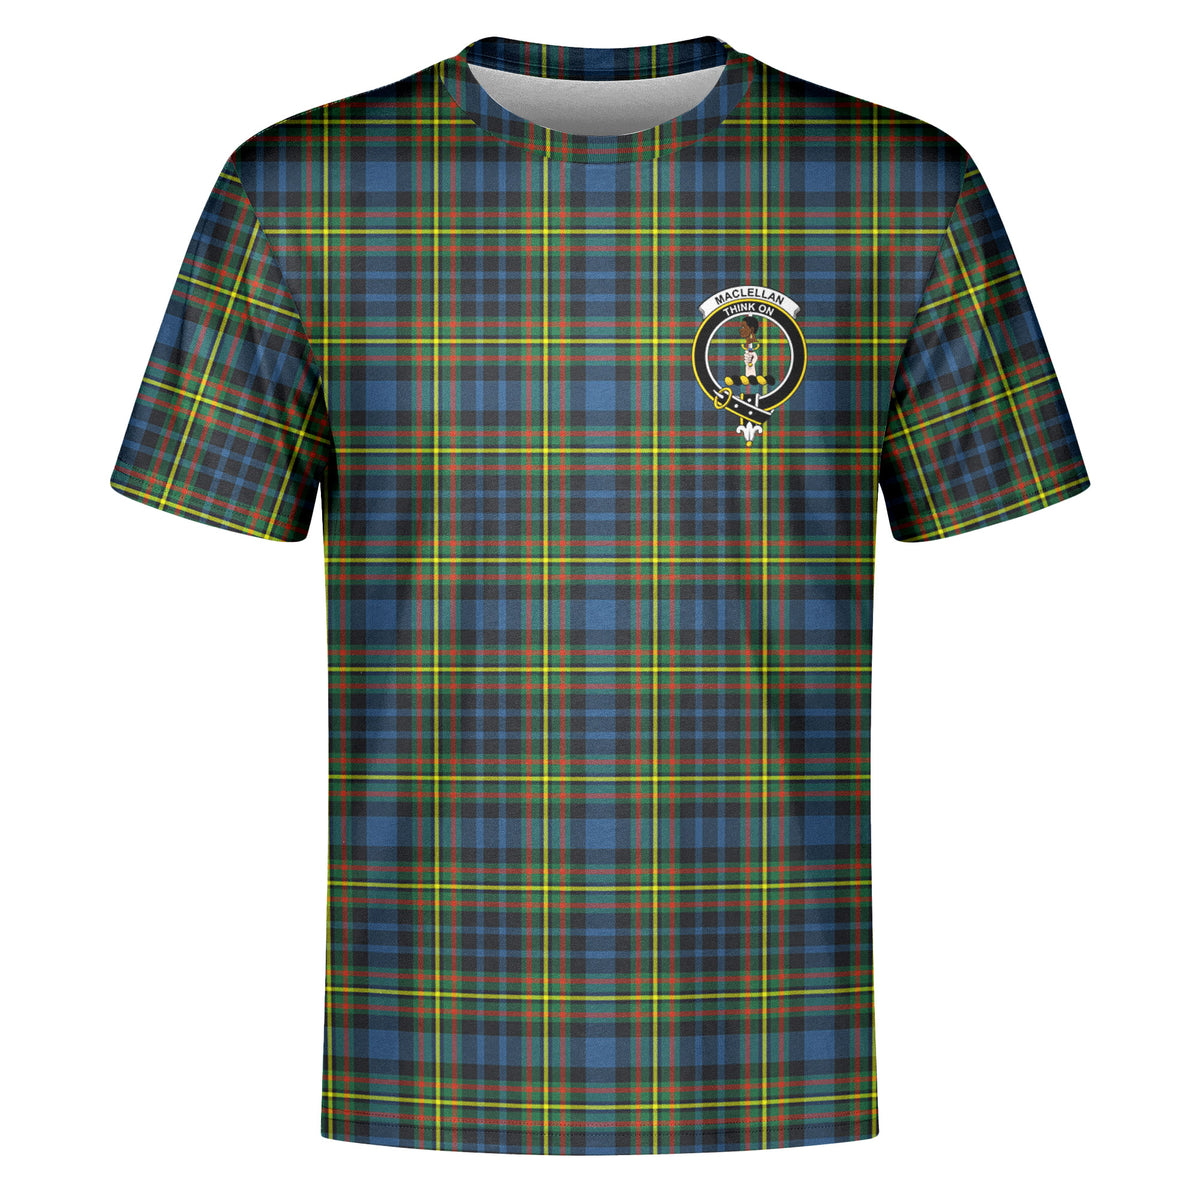 MacLellan Ancient Tartan Crest T-shirt